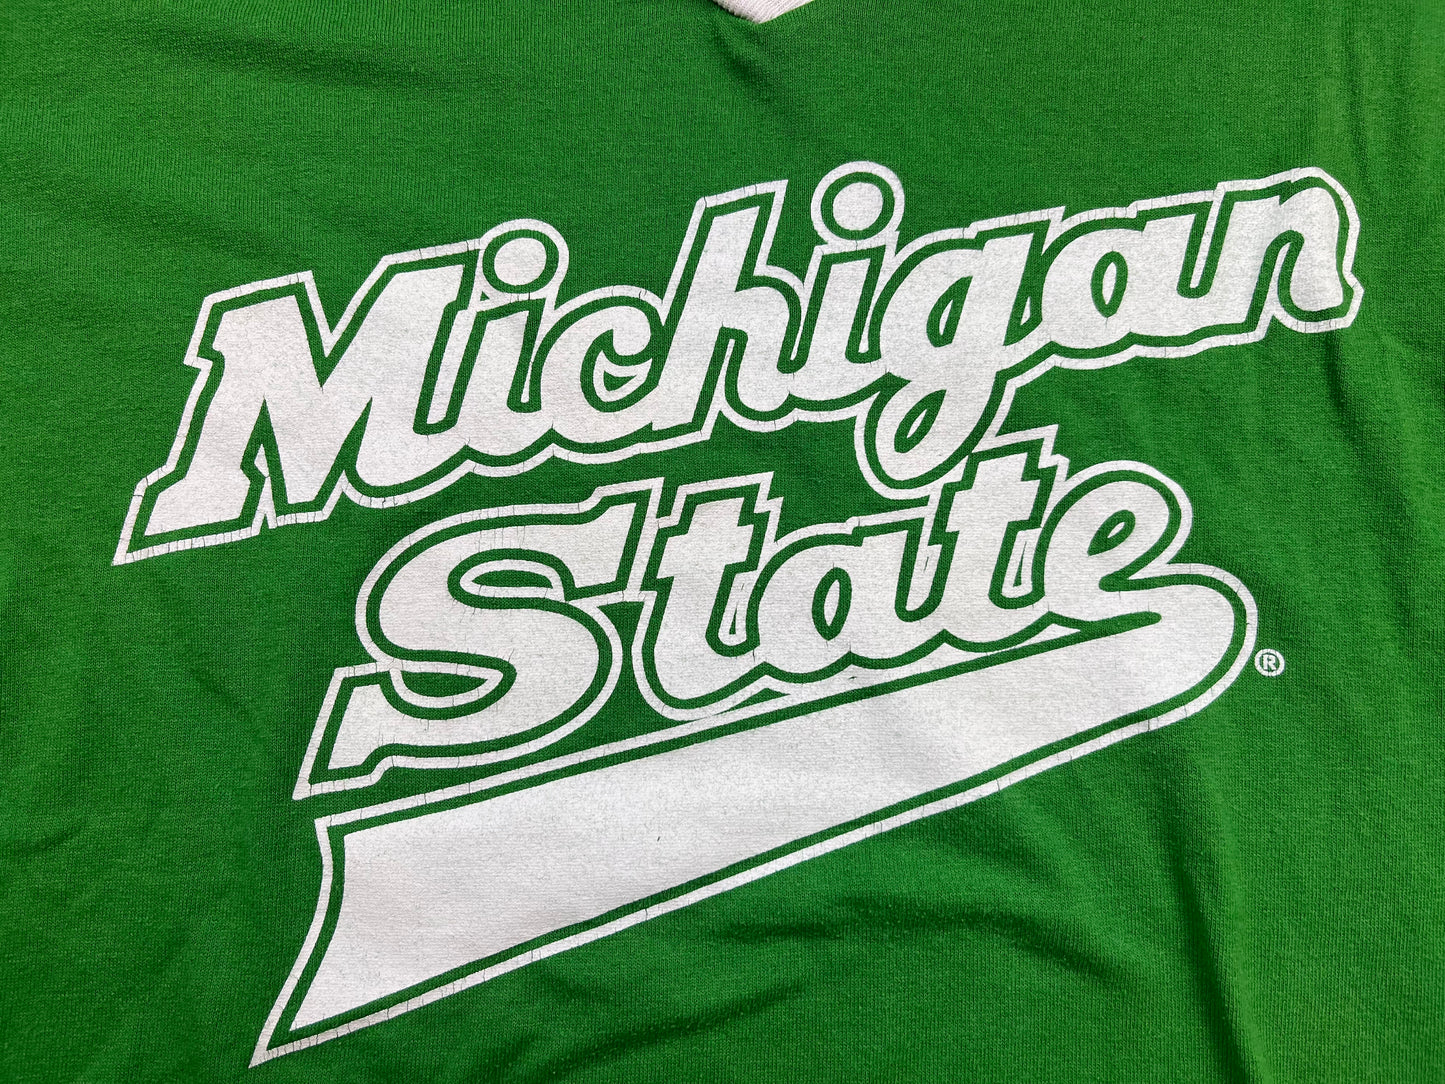 Michigan State 70s T-Shirt